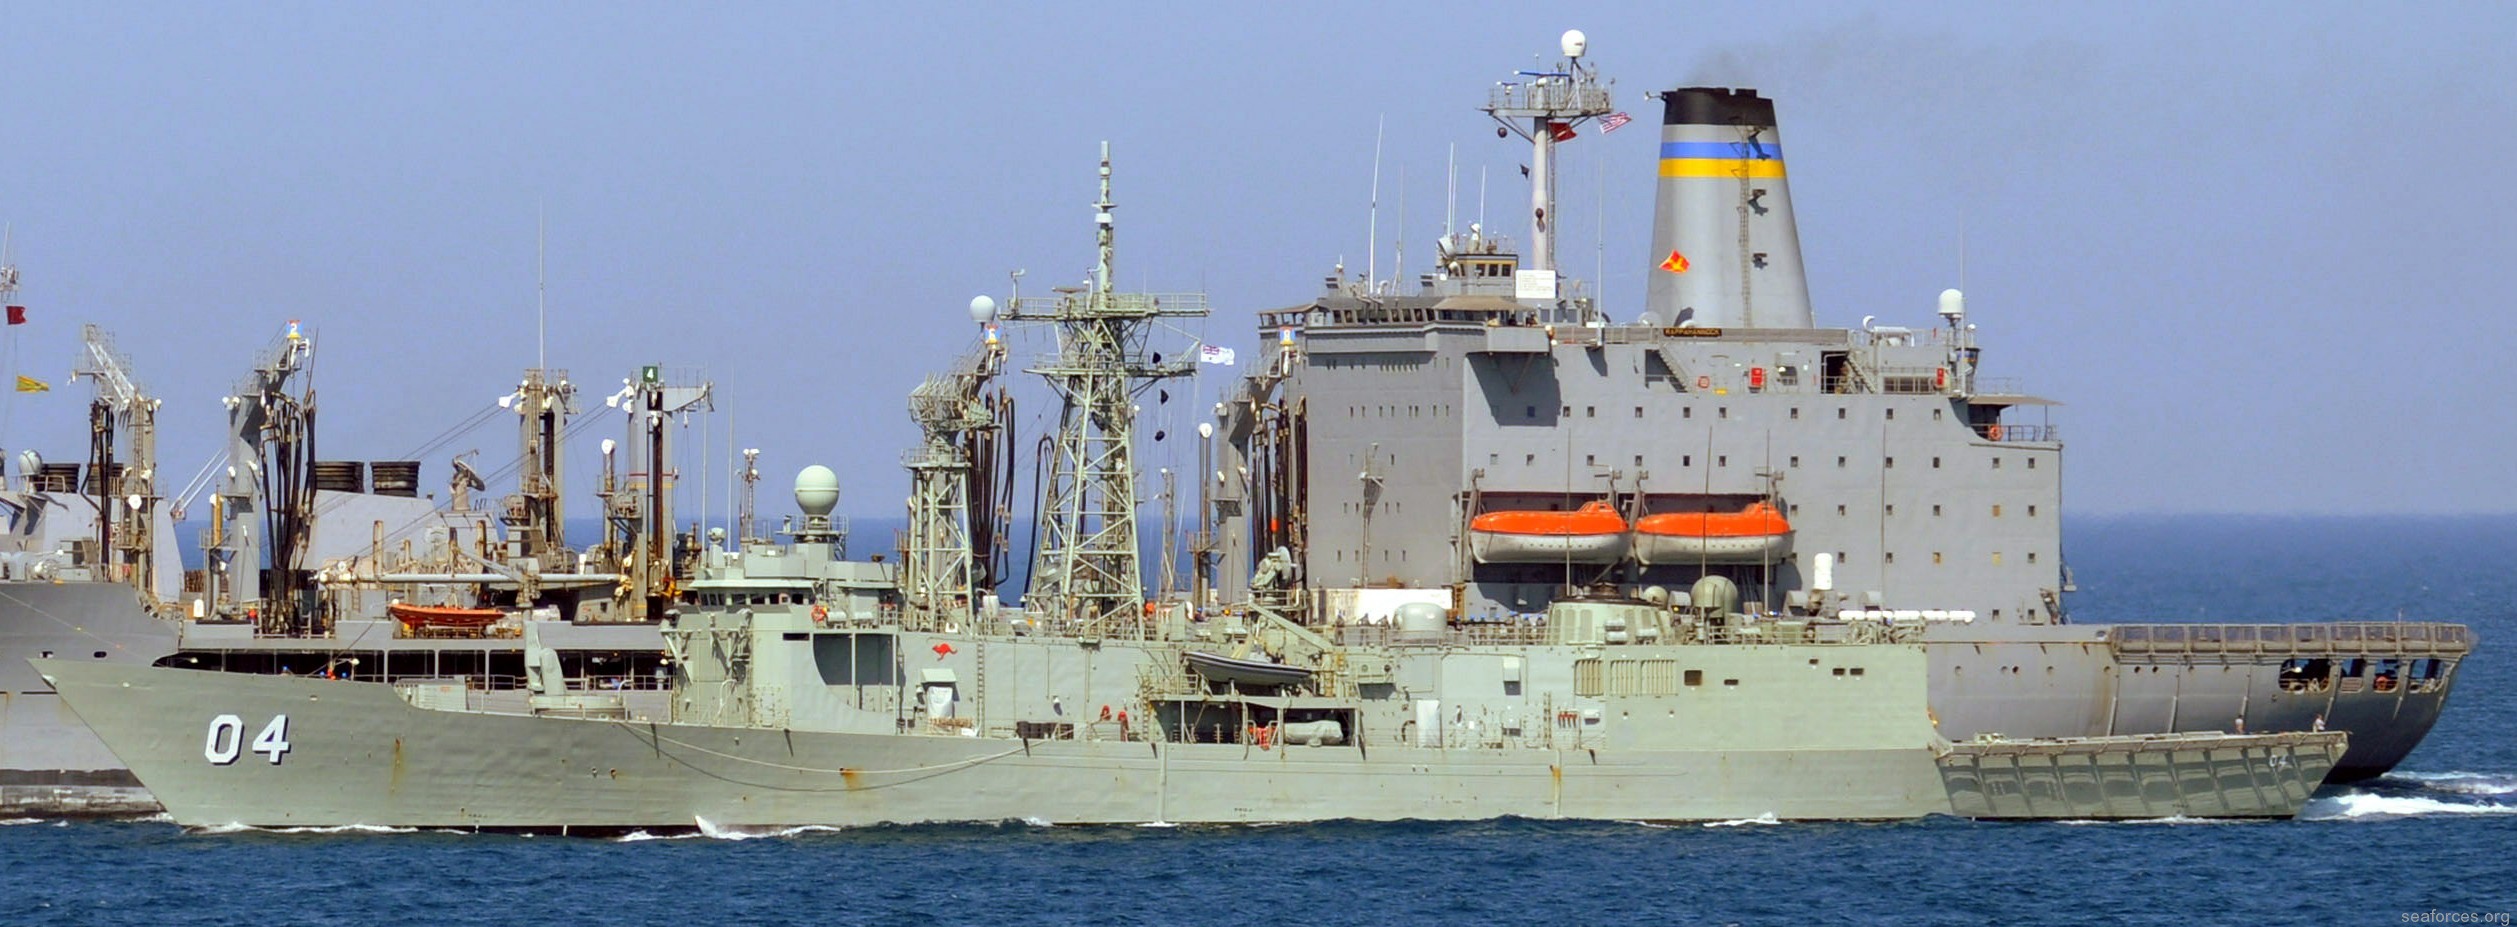 ffg-04 hmas darwin adelaide class frigate royal australian navy 2011 35